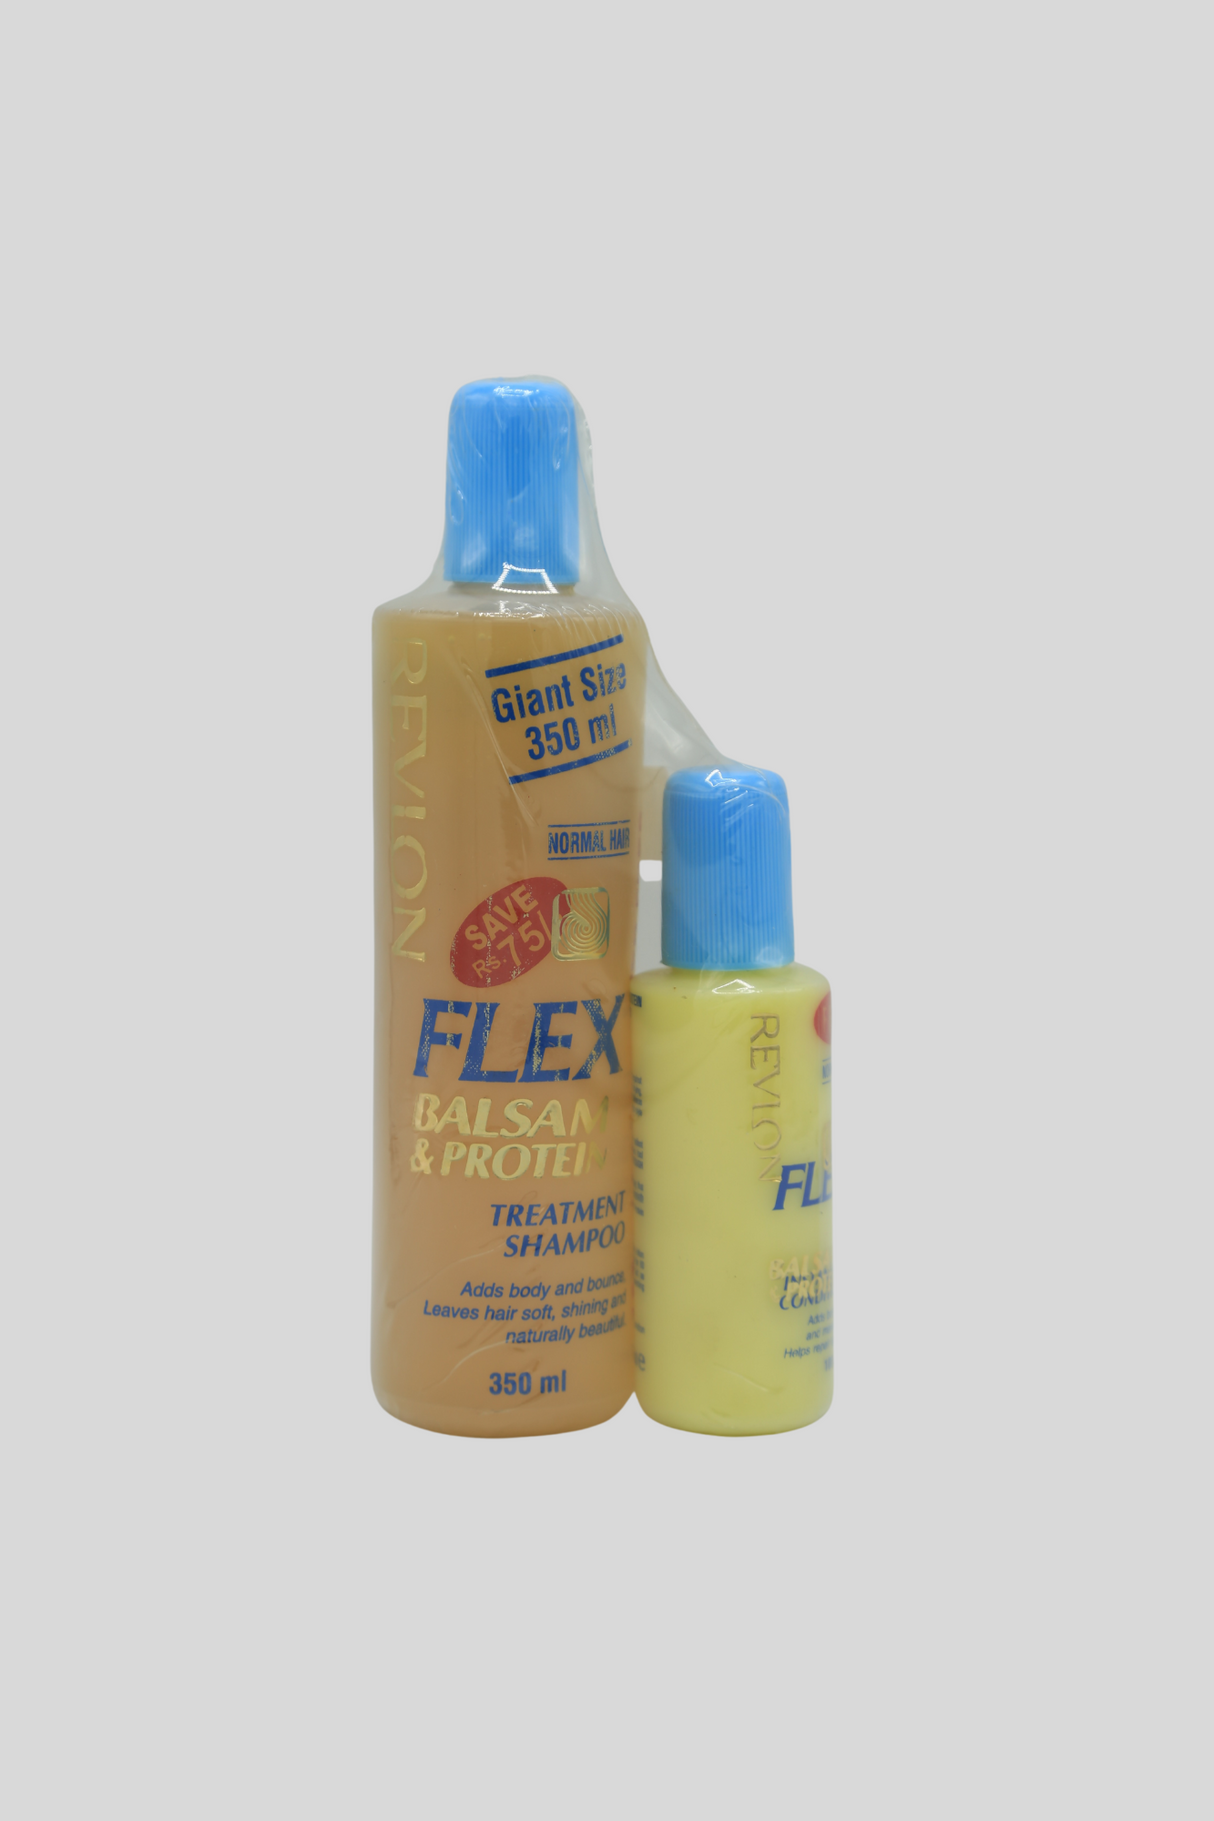 revlon flex shampoo promo 350ml